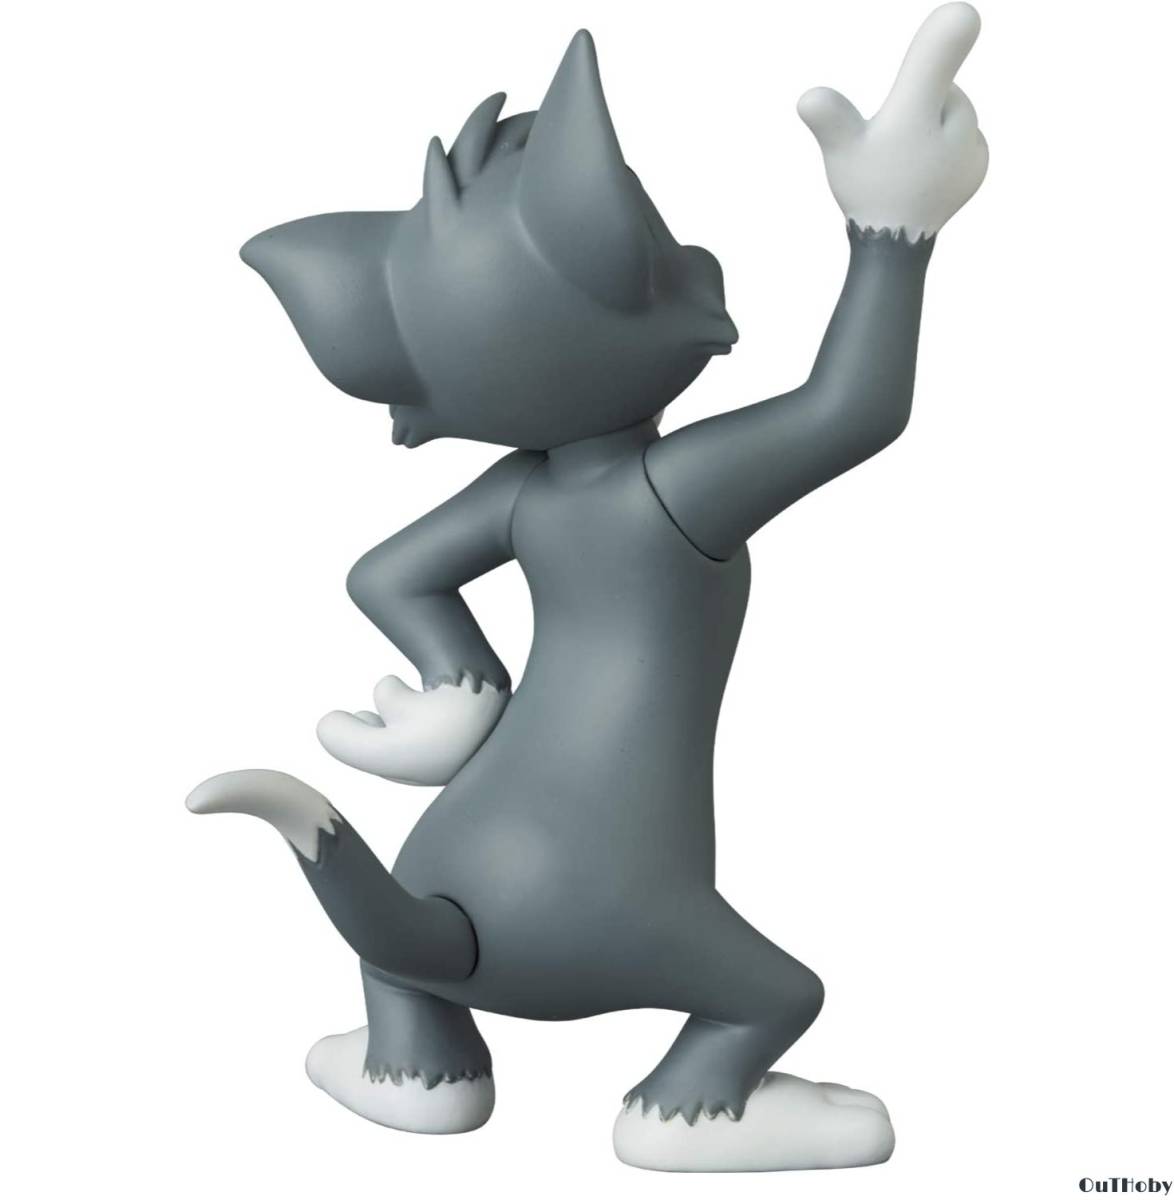  Tom фигурка * Tom . Jerry фильм аниме * кукла кукла украшение интерьер игрушка подарок подарок подарок кошка мышь 